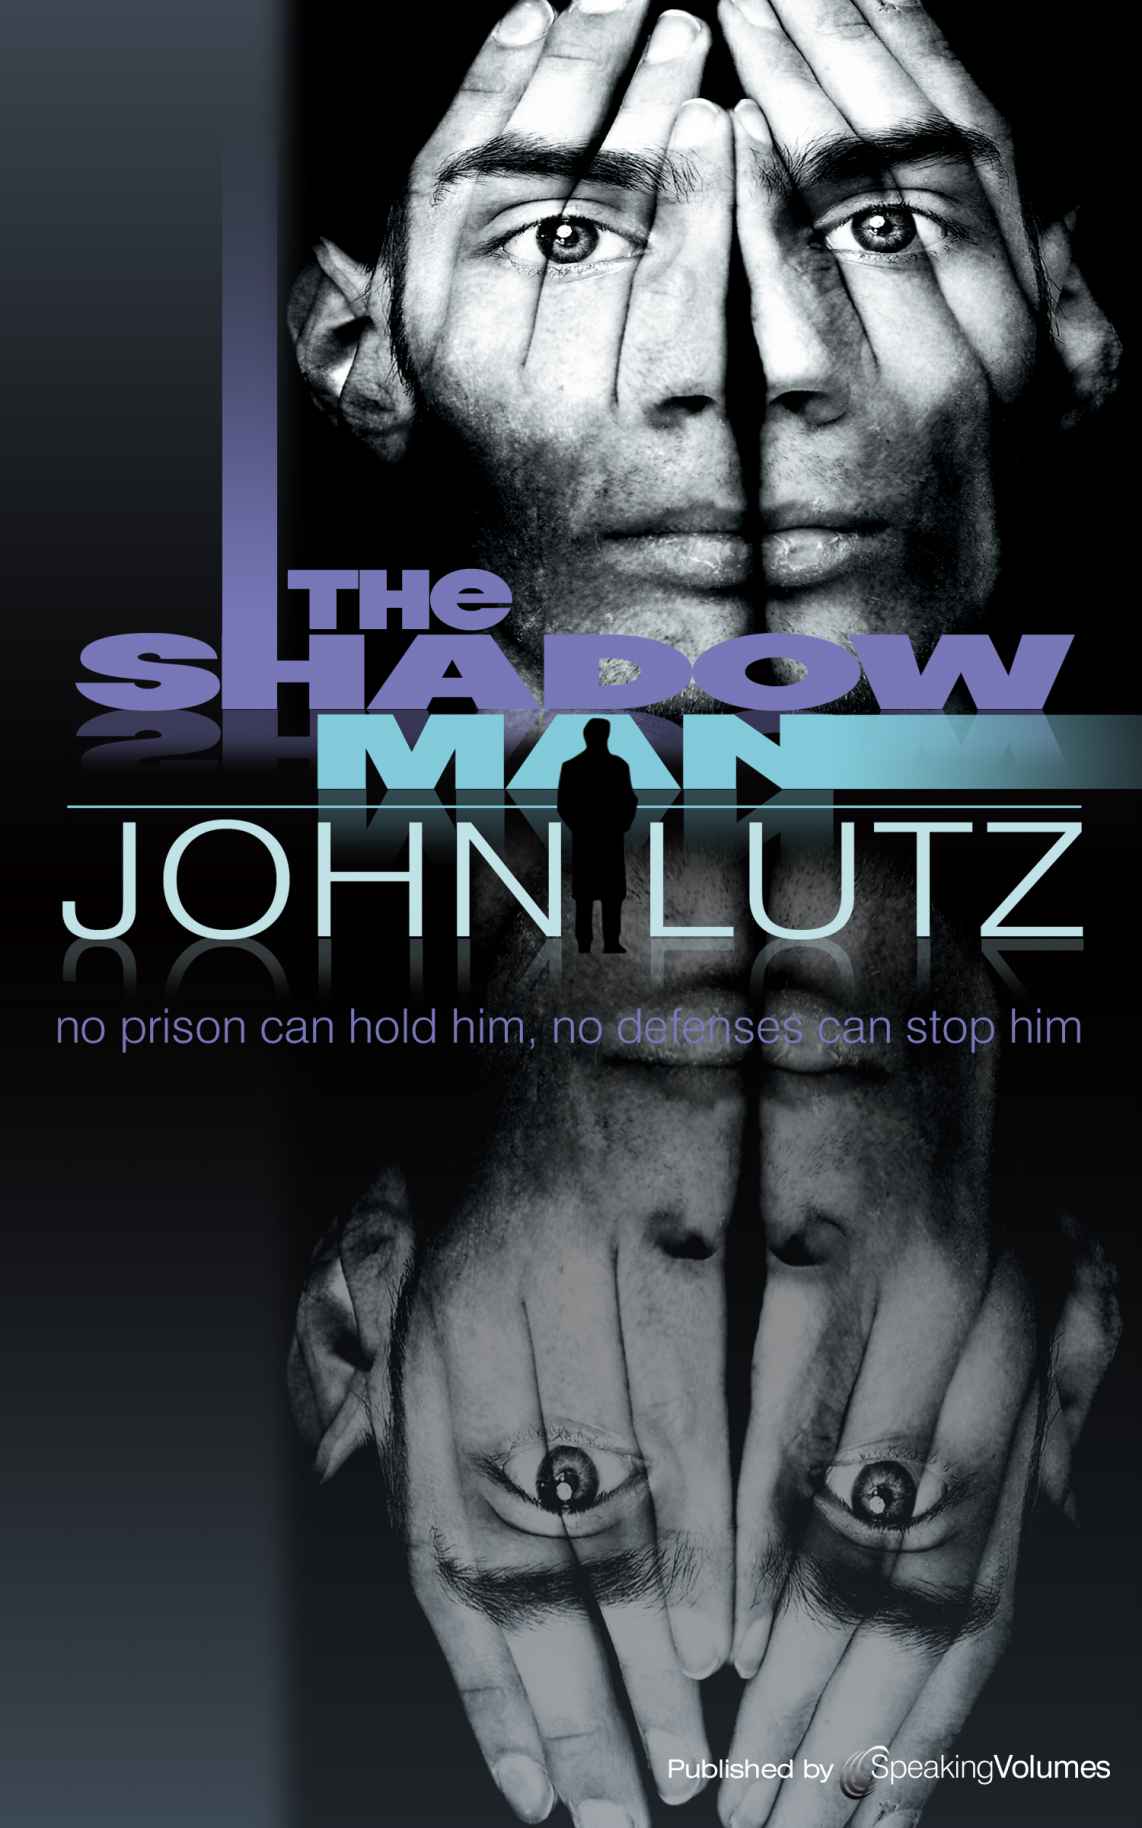 The Shadow Man by John Lutz